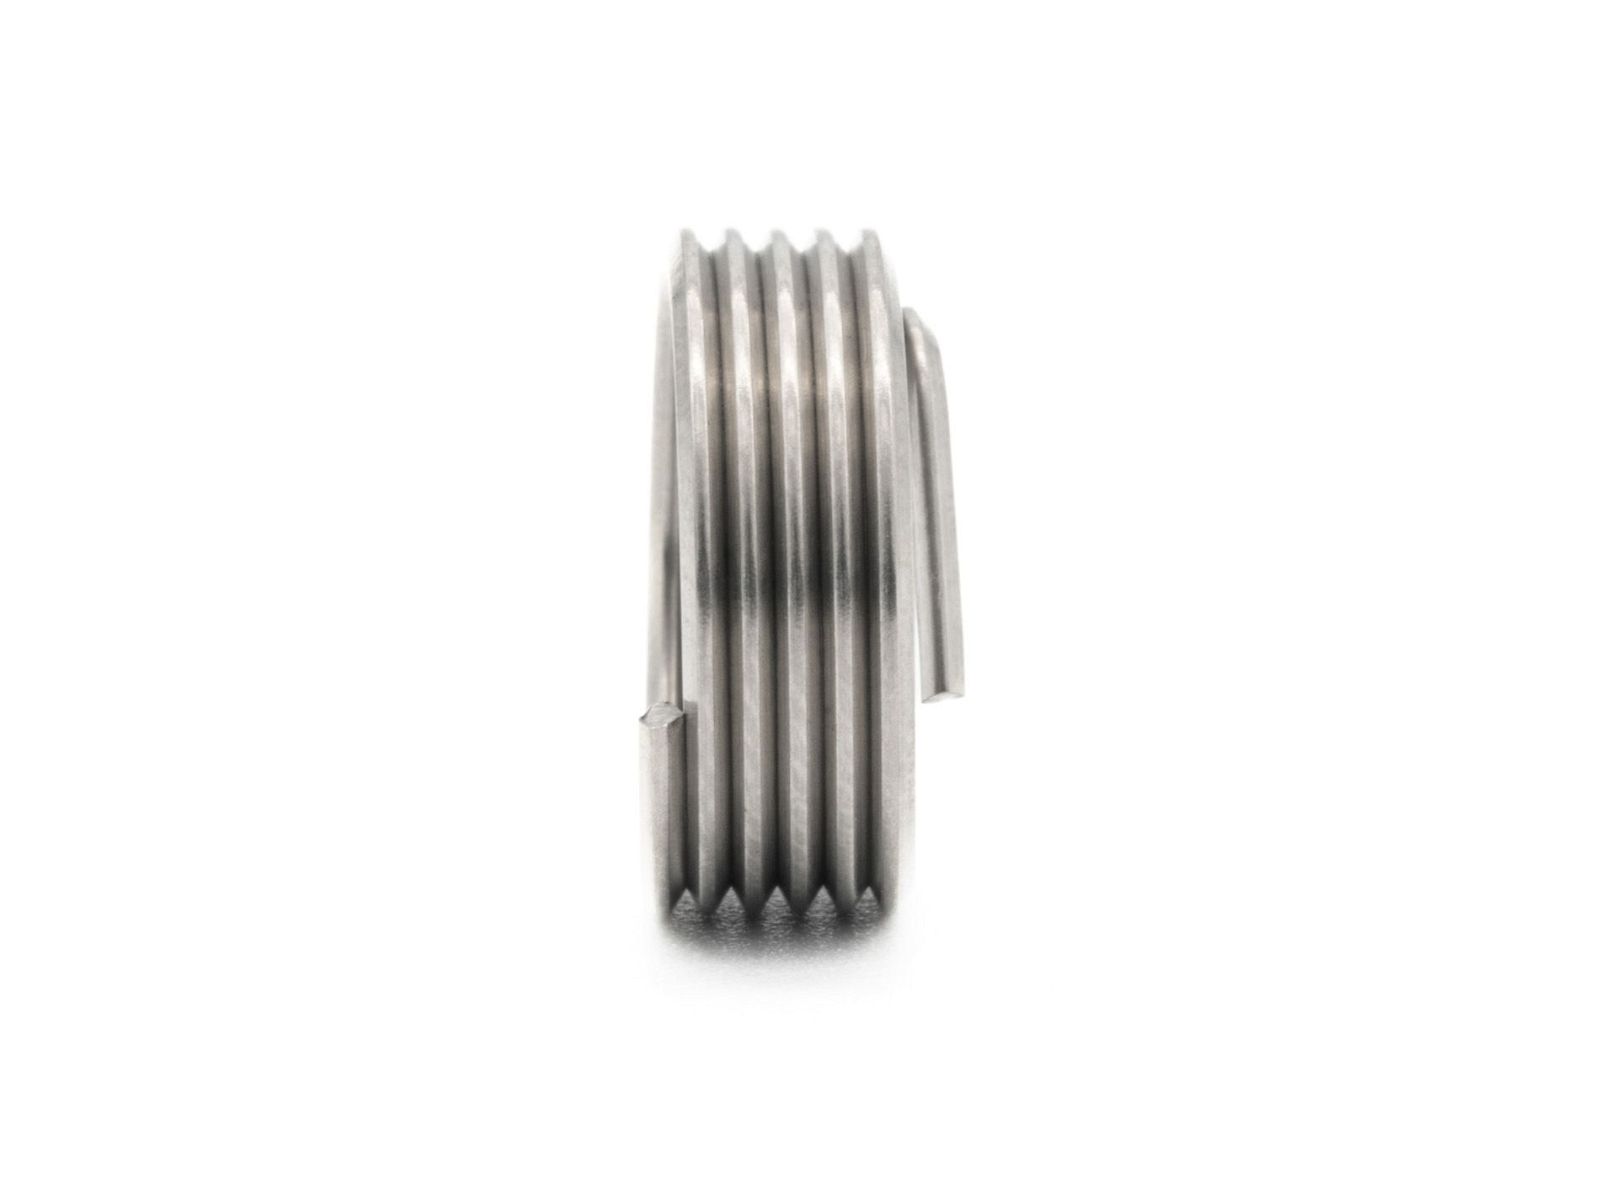 BaerCoil Wire Thread Inserts G (BSP) 1/4 x 19 - 1.5 D (9.53 mm) - free running - 100 pcs.